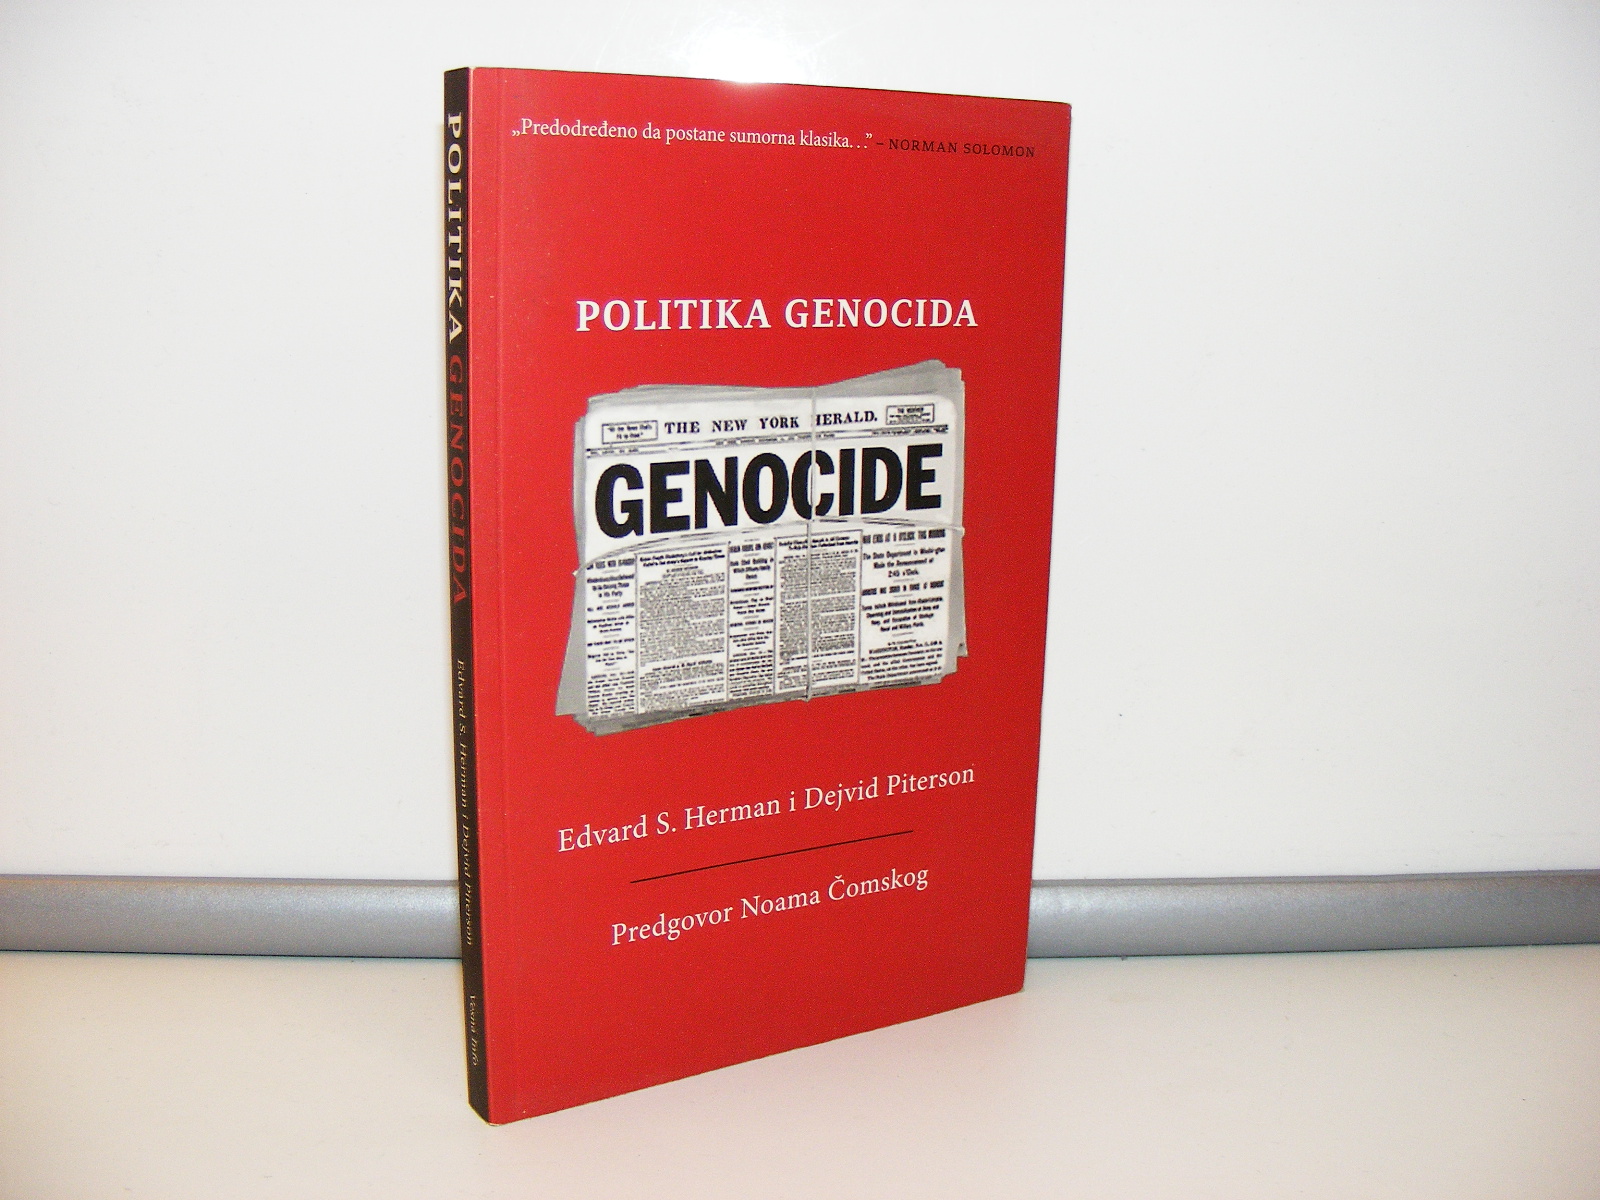 Politika genocida Edvard Herman i Dejvid Piterson